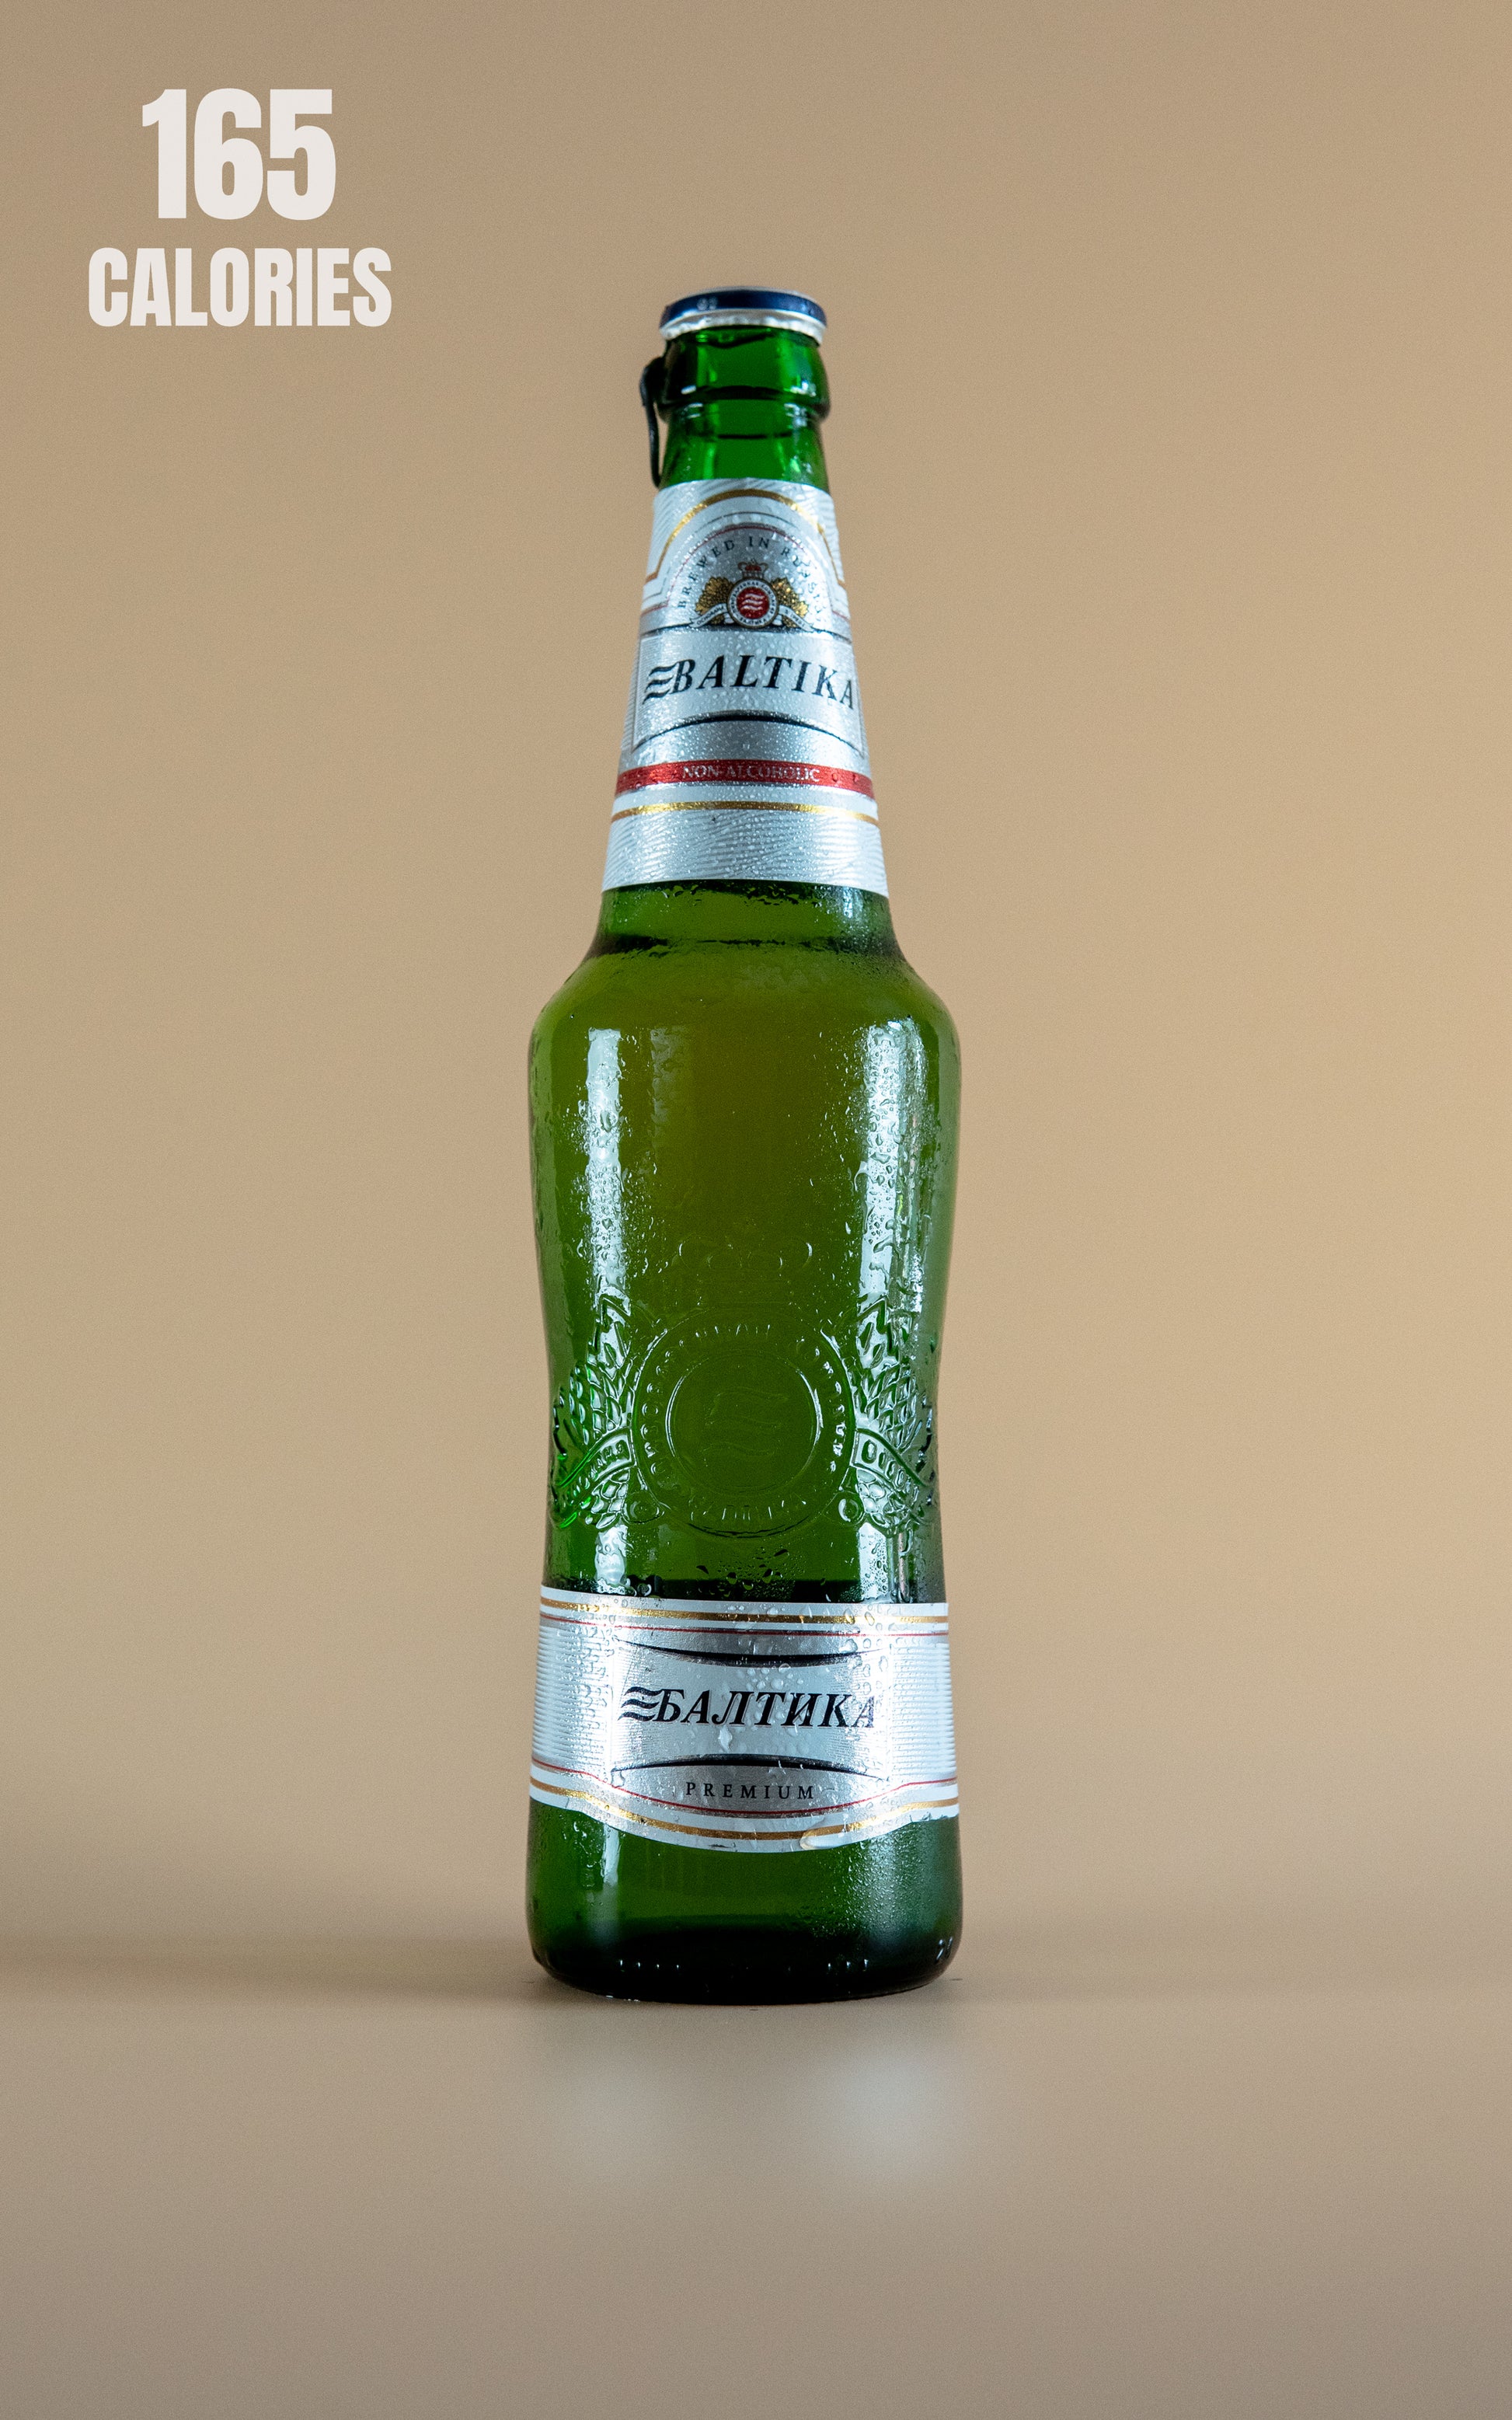 LightDrinks - Baltika Premium Alcohol Free Beer 0.5% - 470ml